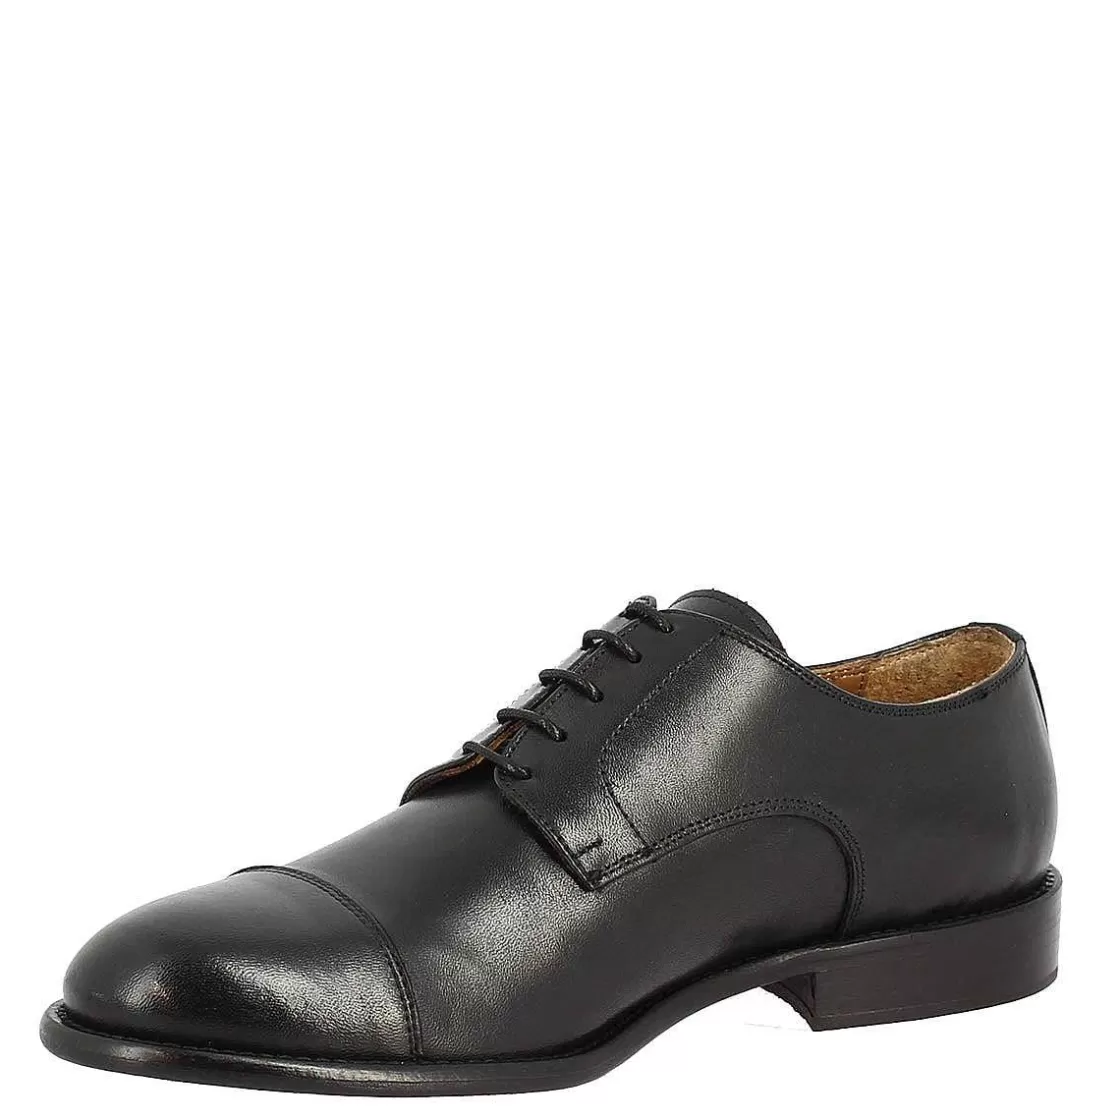 Leonardo Handmade Men'S Oxford Shoes In Black Leather Calfskin With Tip New